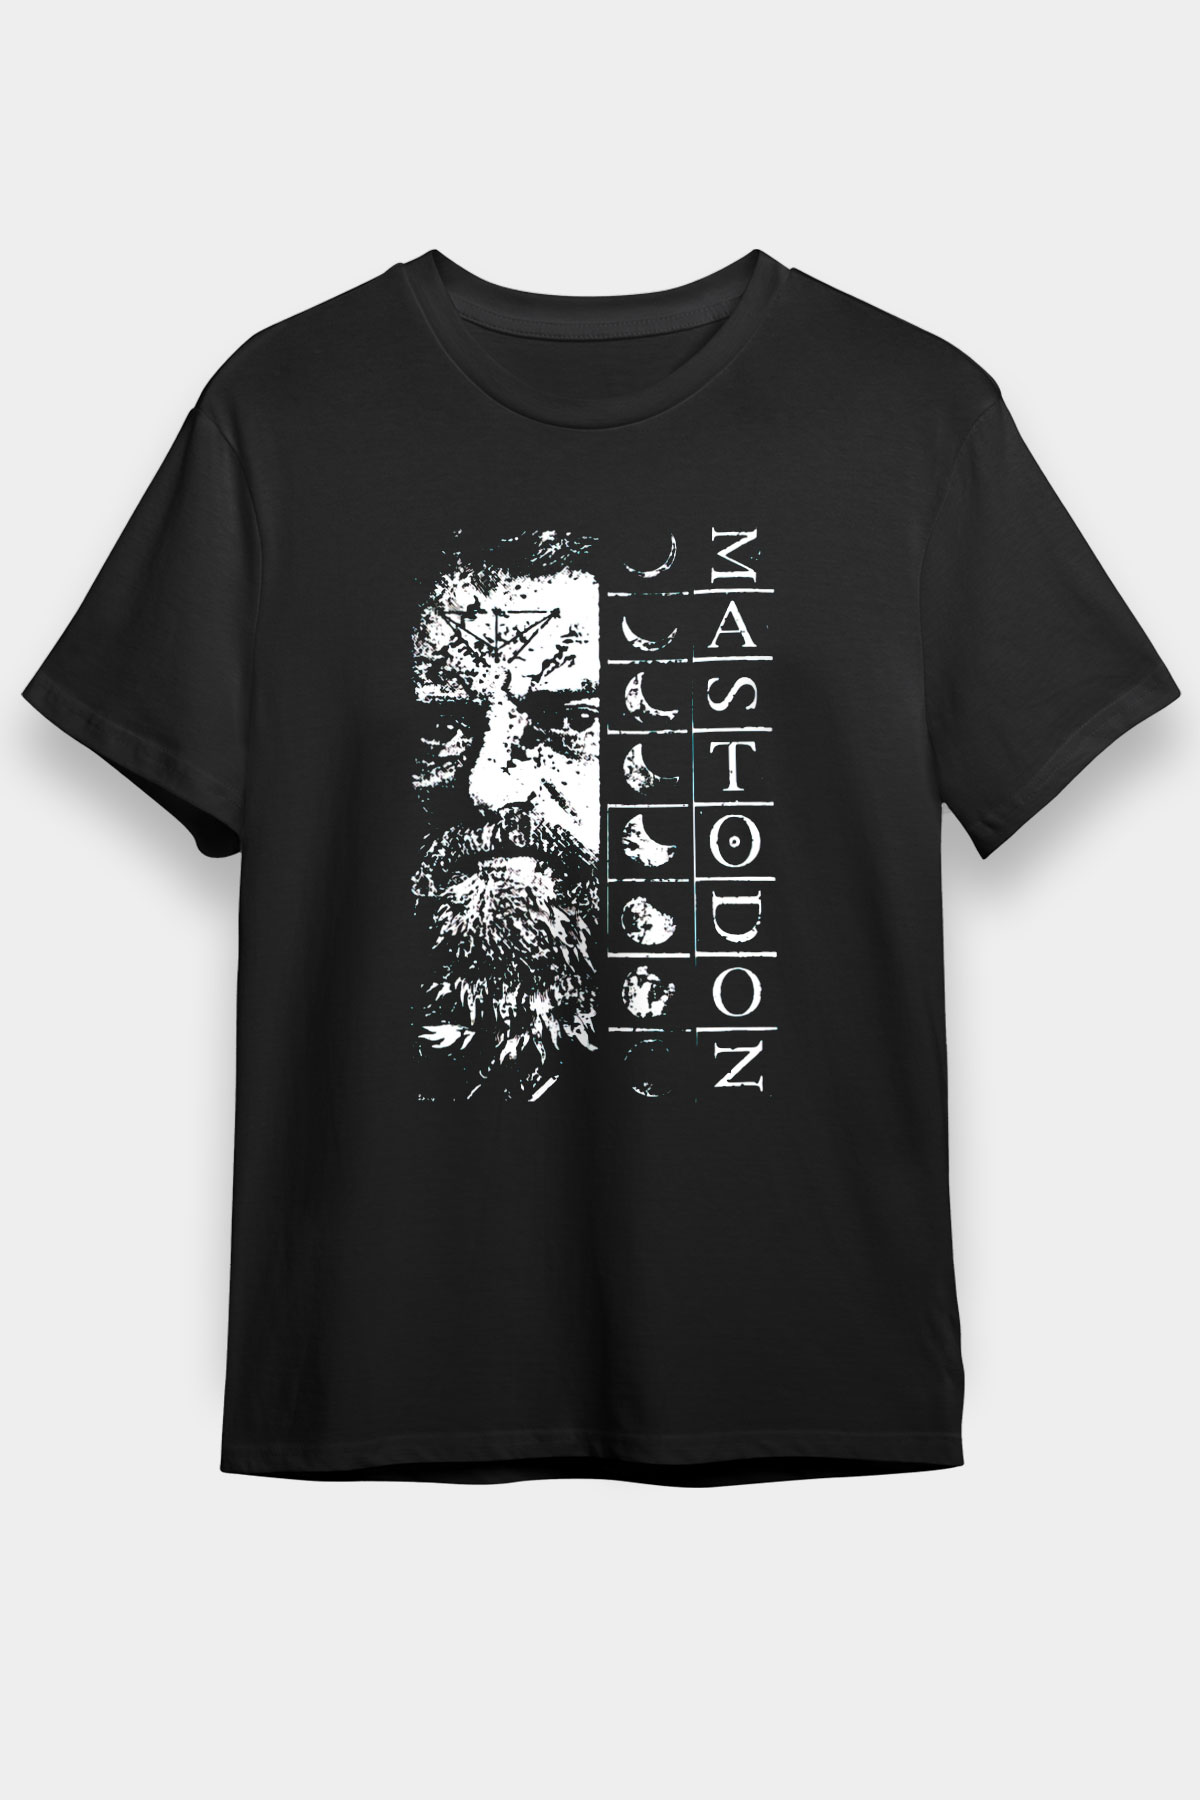 Mastodon T shirt,Music Band,Unisex Tshirt 10